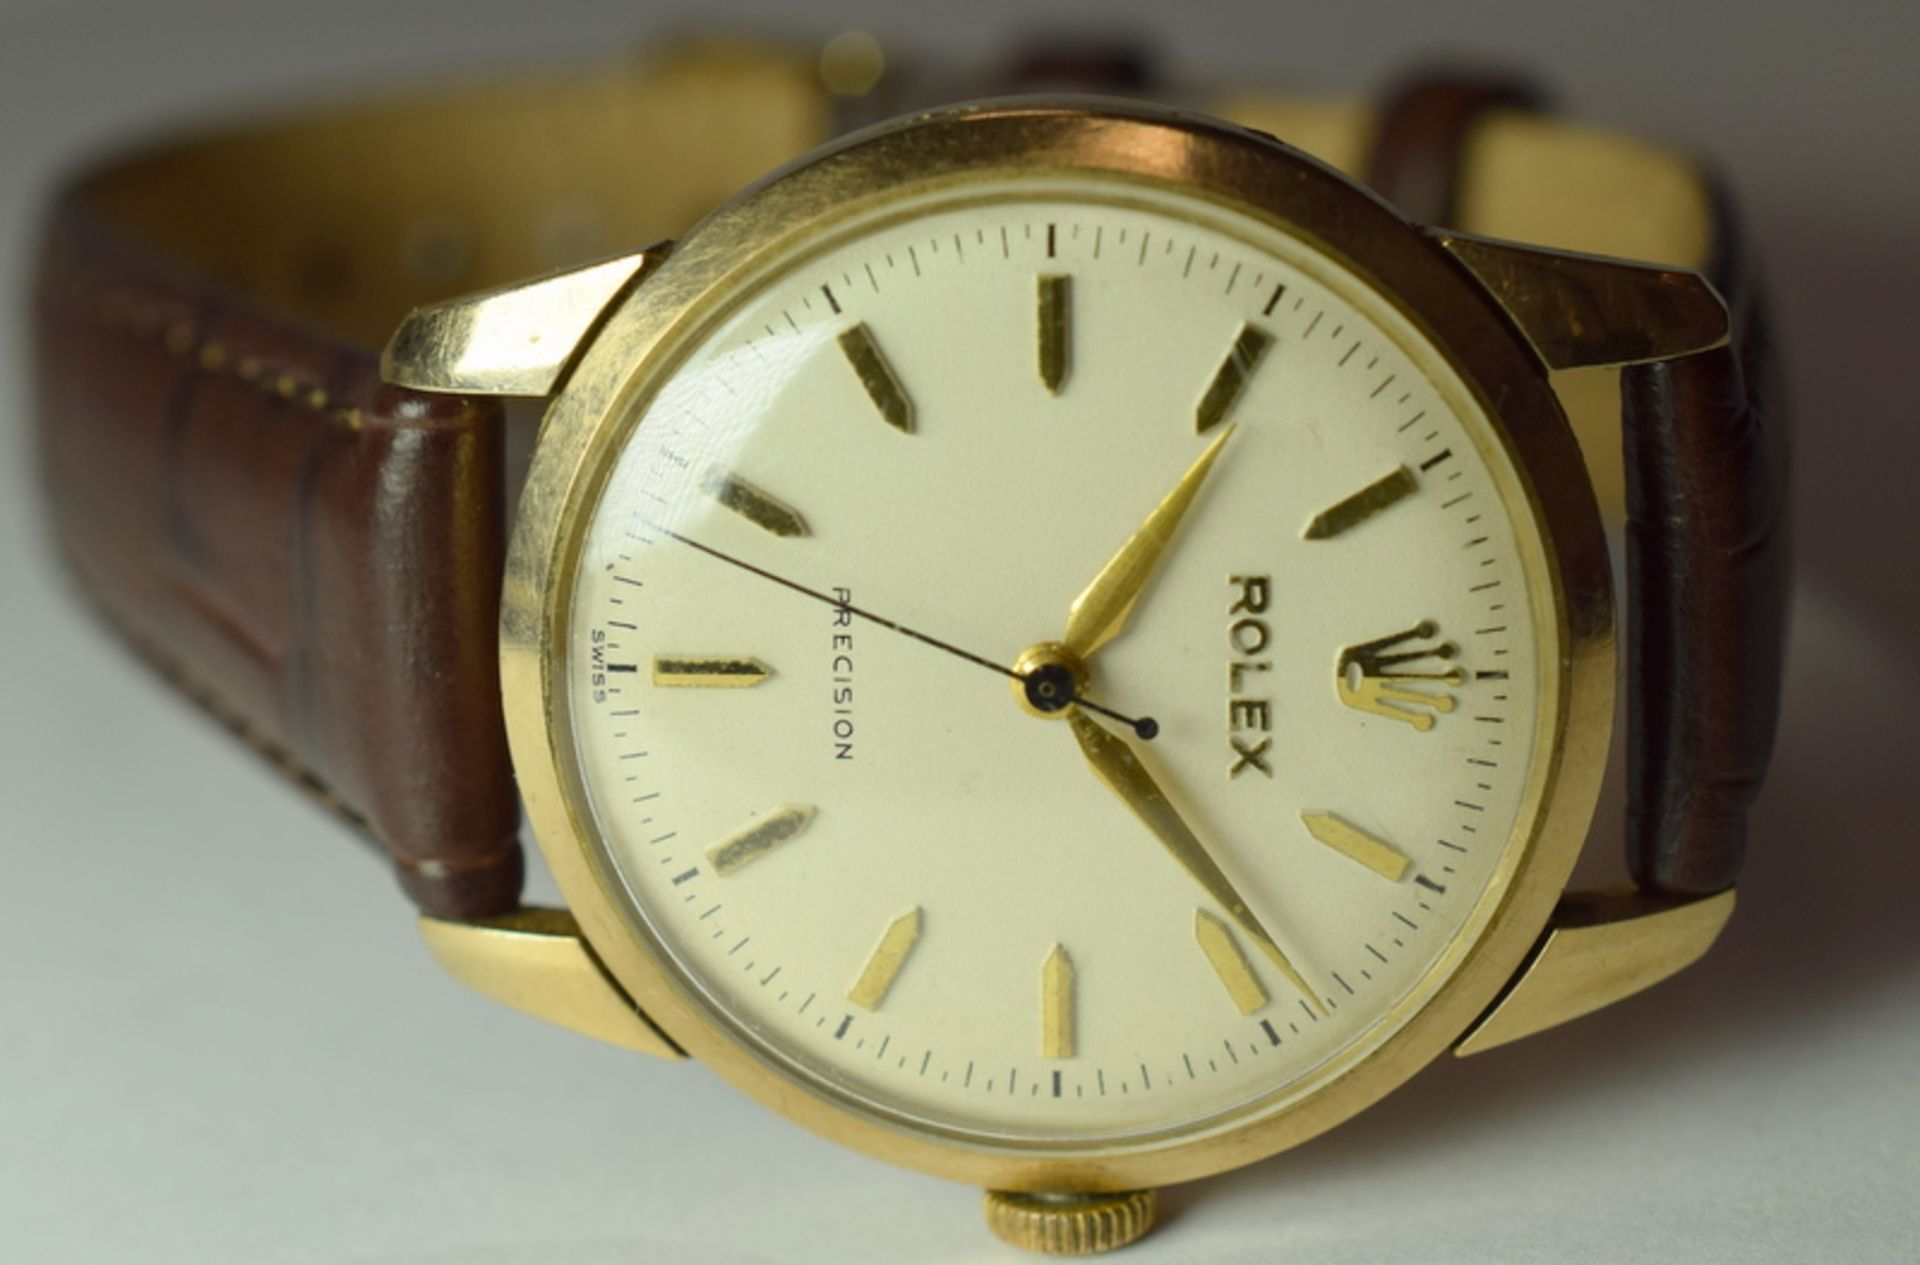 Rolex Precision 9ct Gold Gentleman's Wristwatch - Image 3 of 5